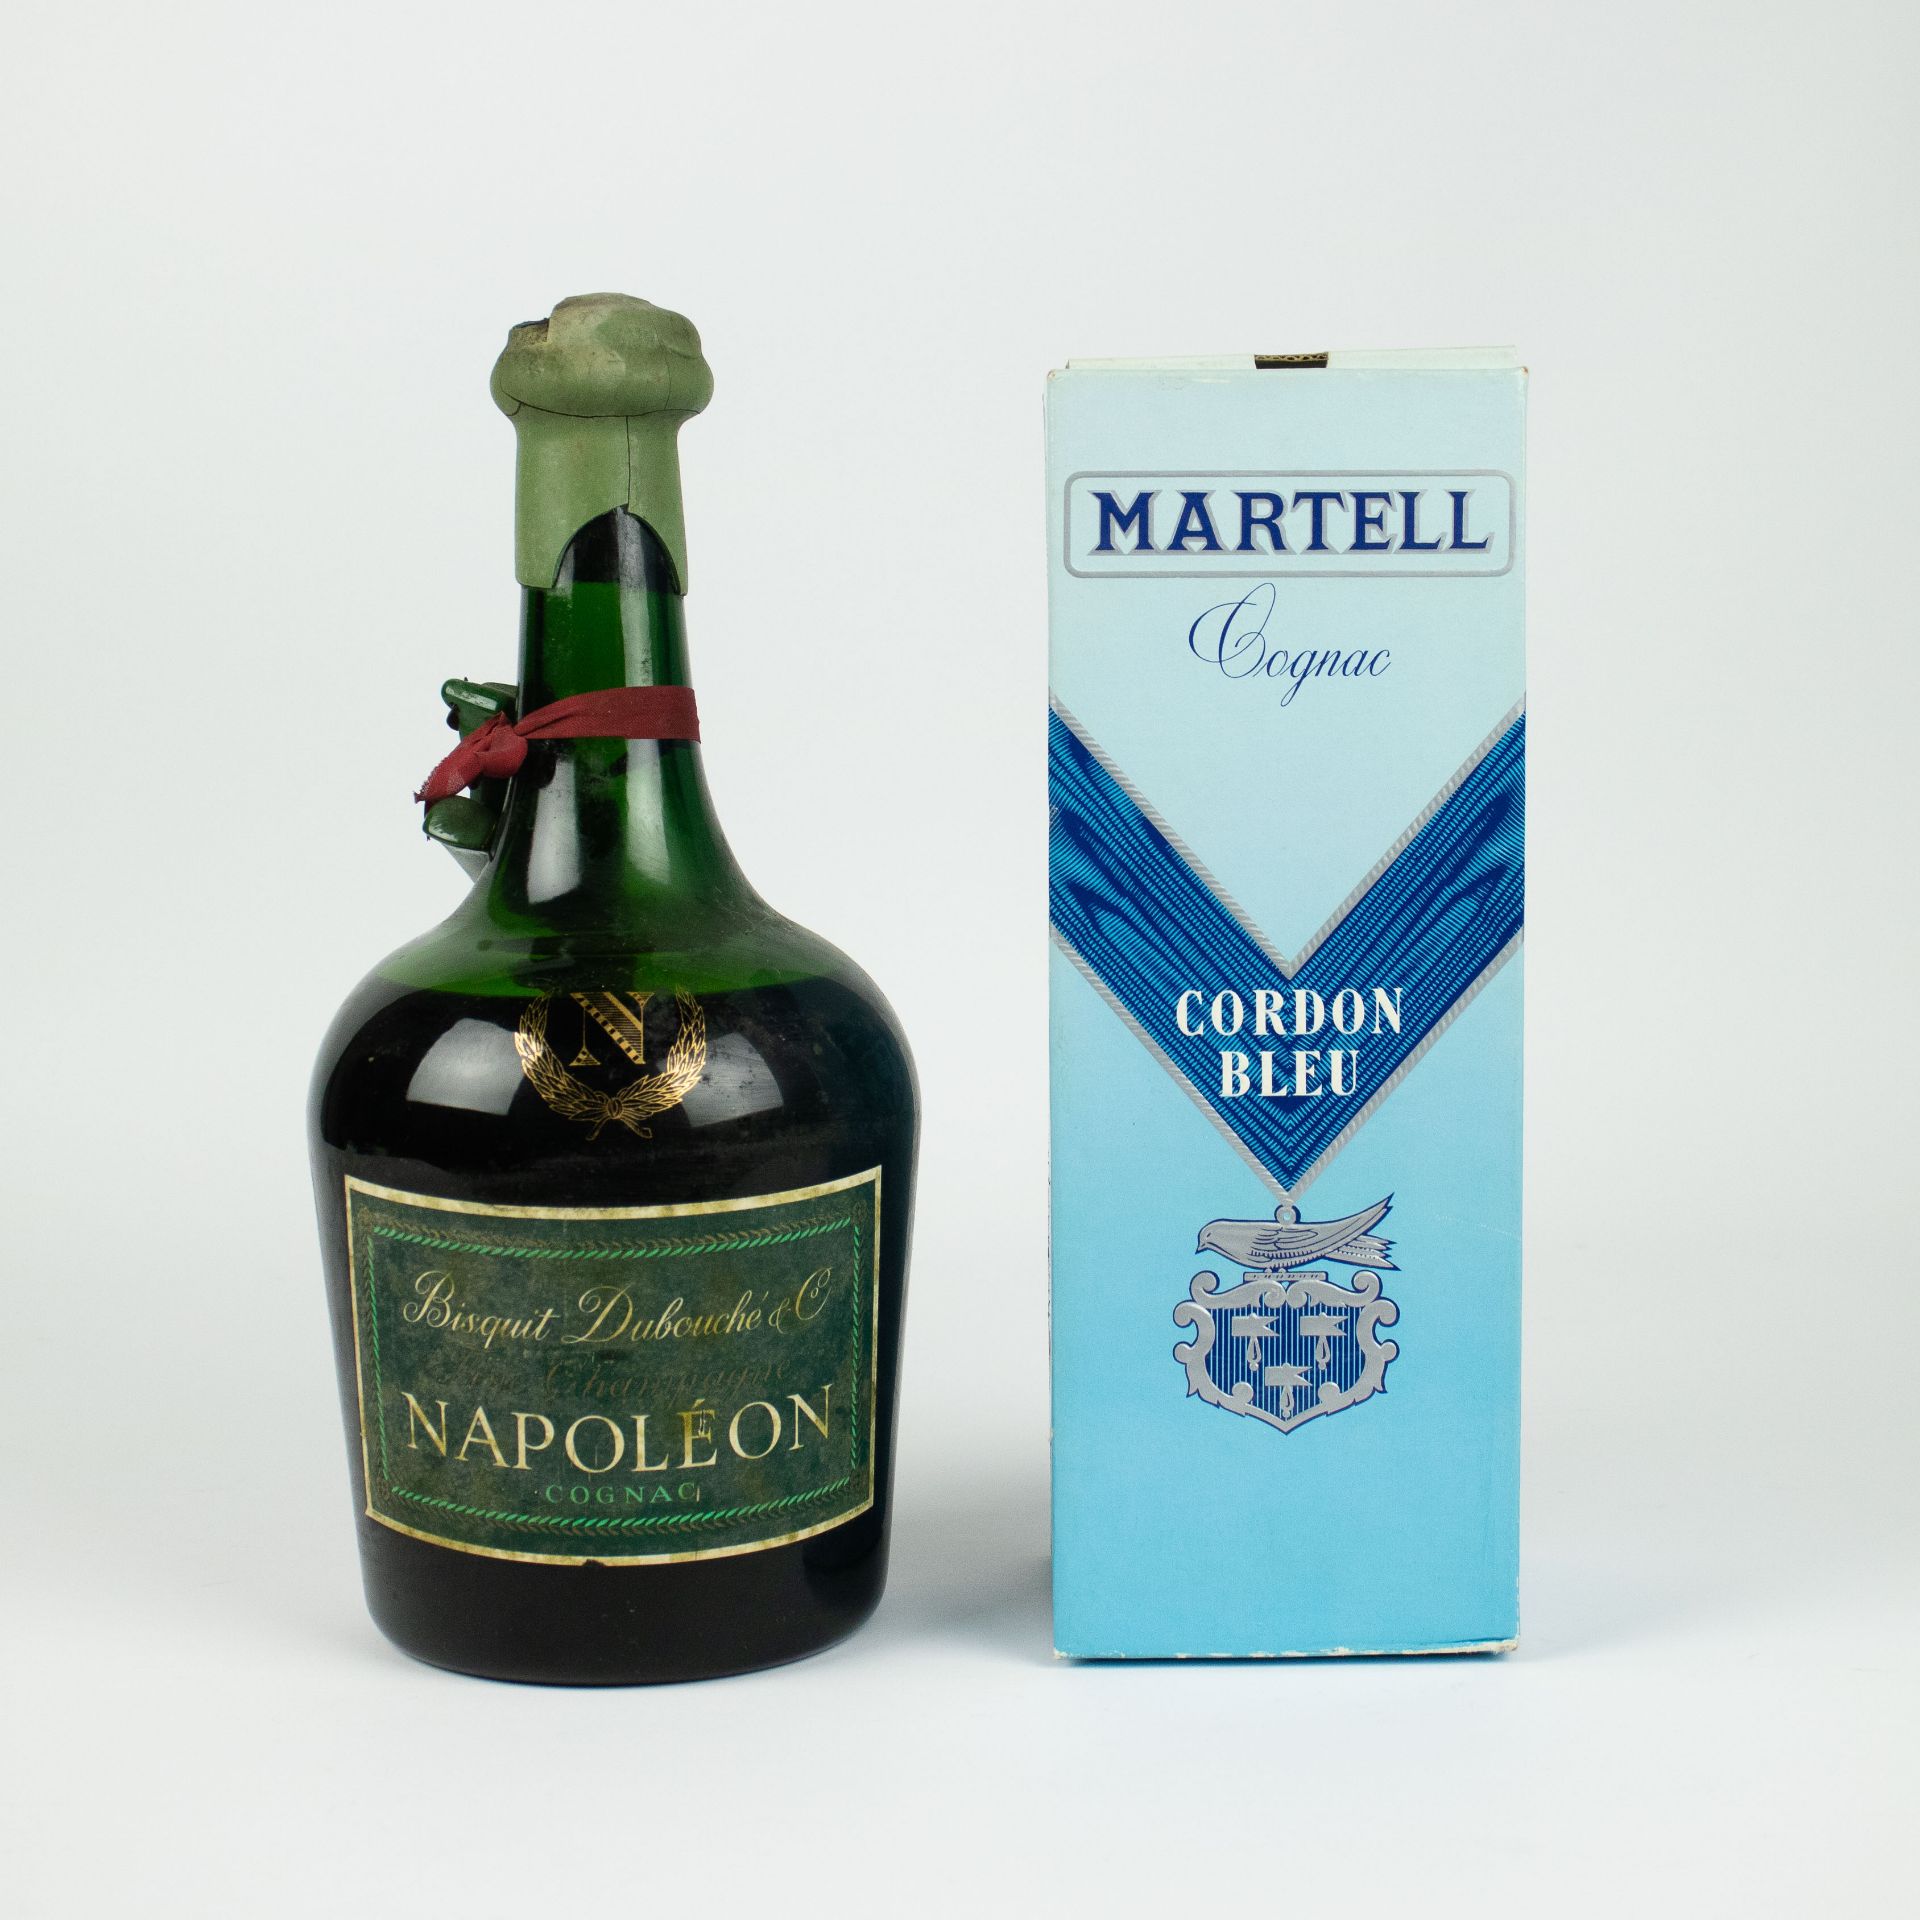 Napoleon Bisquit Cognac sixties and Martell Cognac Cordon Blue - Image 6 of 11